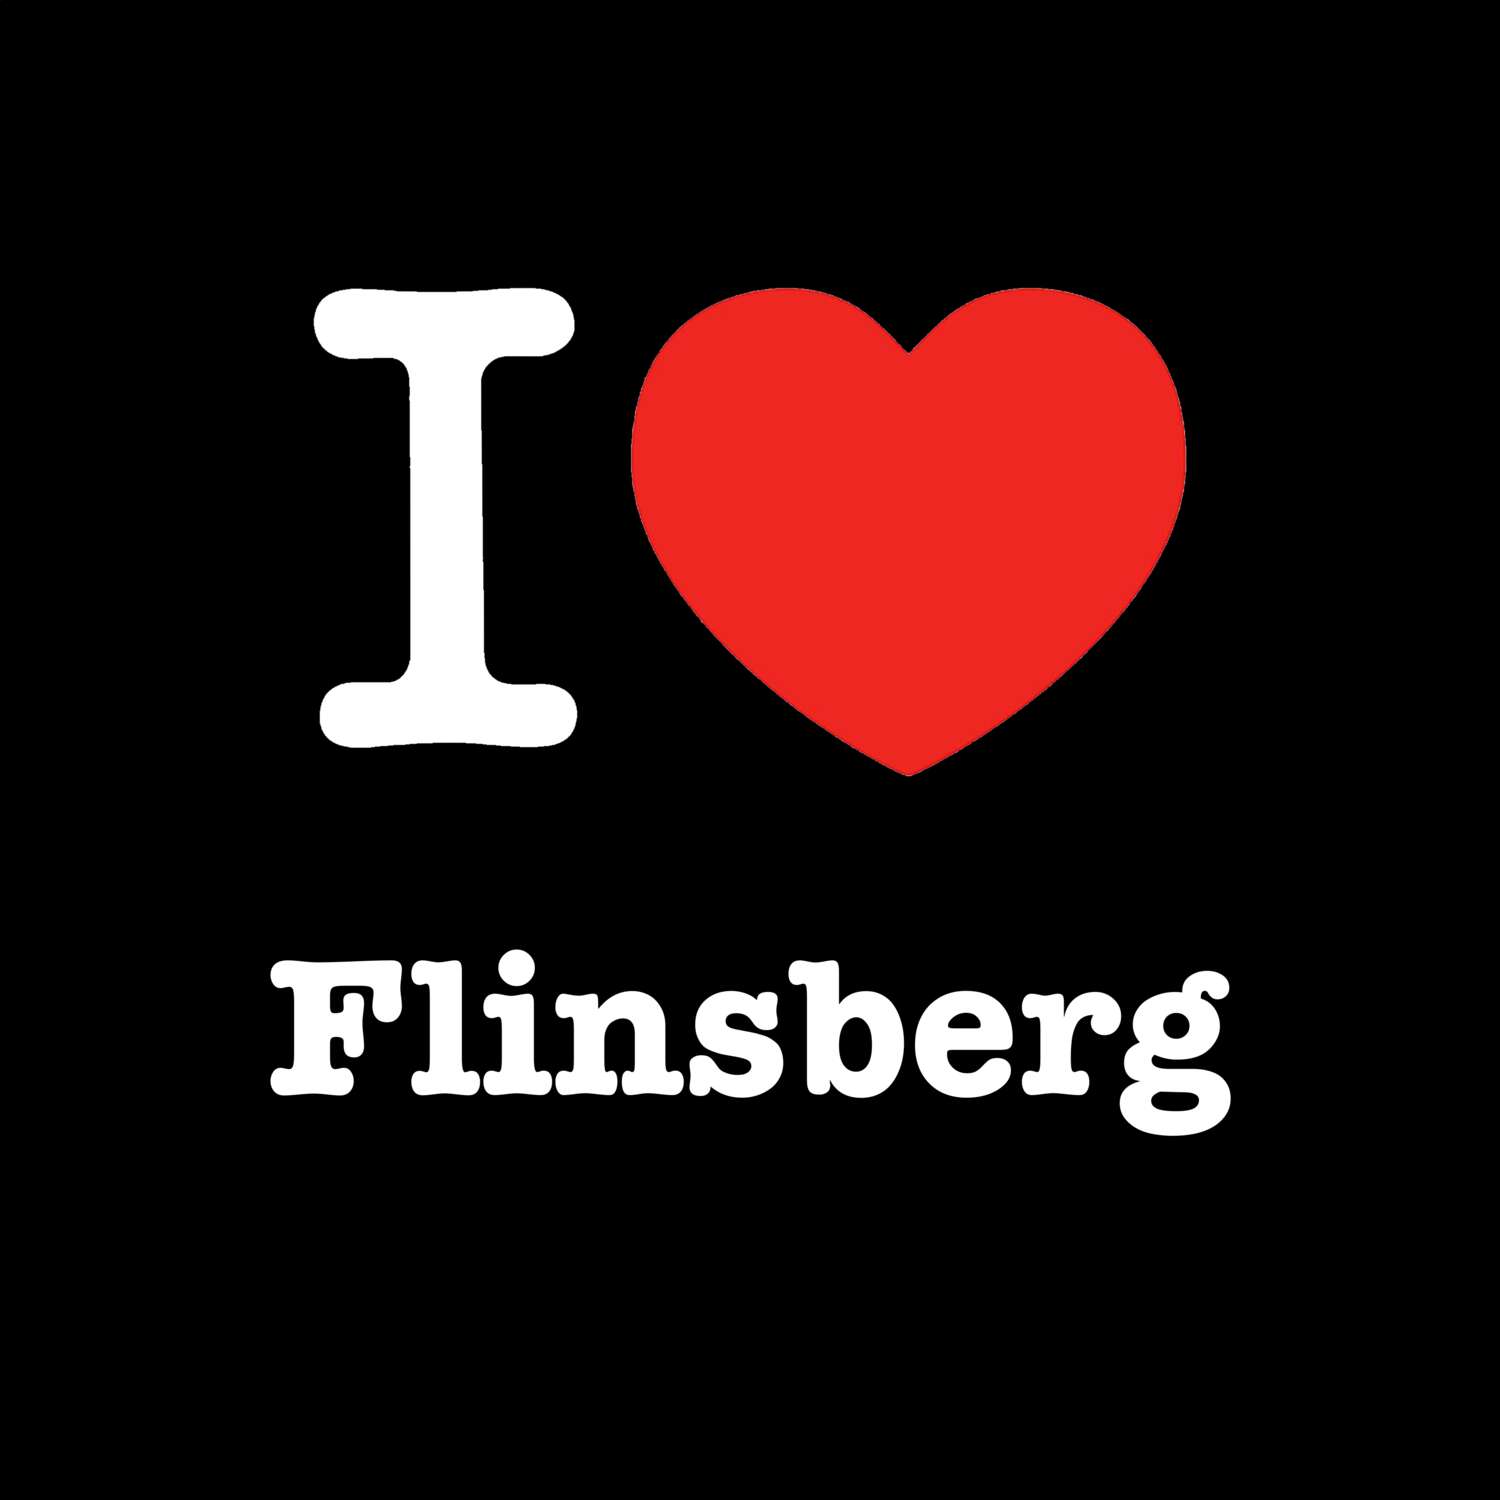 Flinsberg T-Shirt »I love«